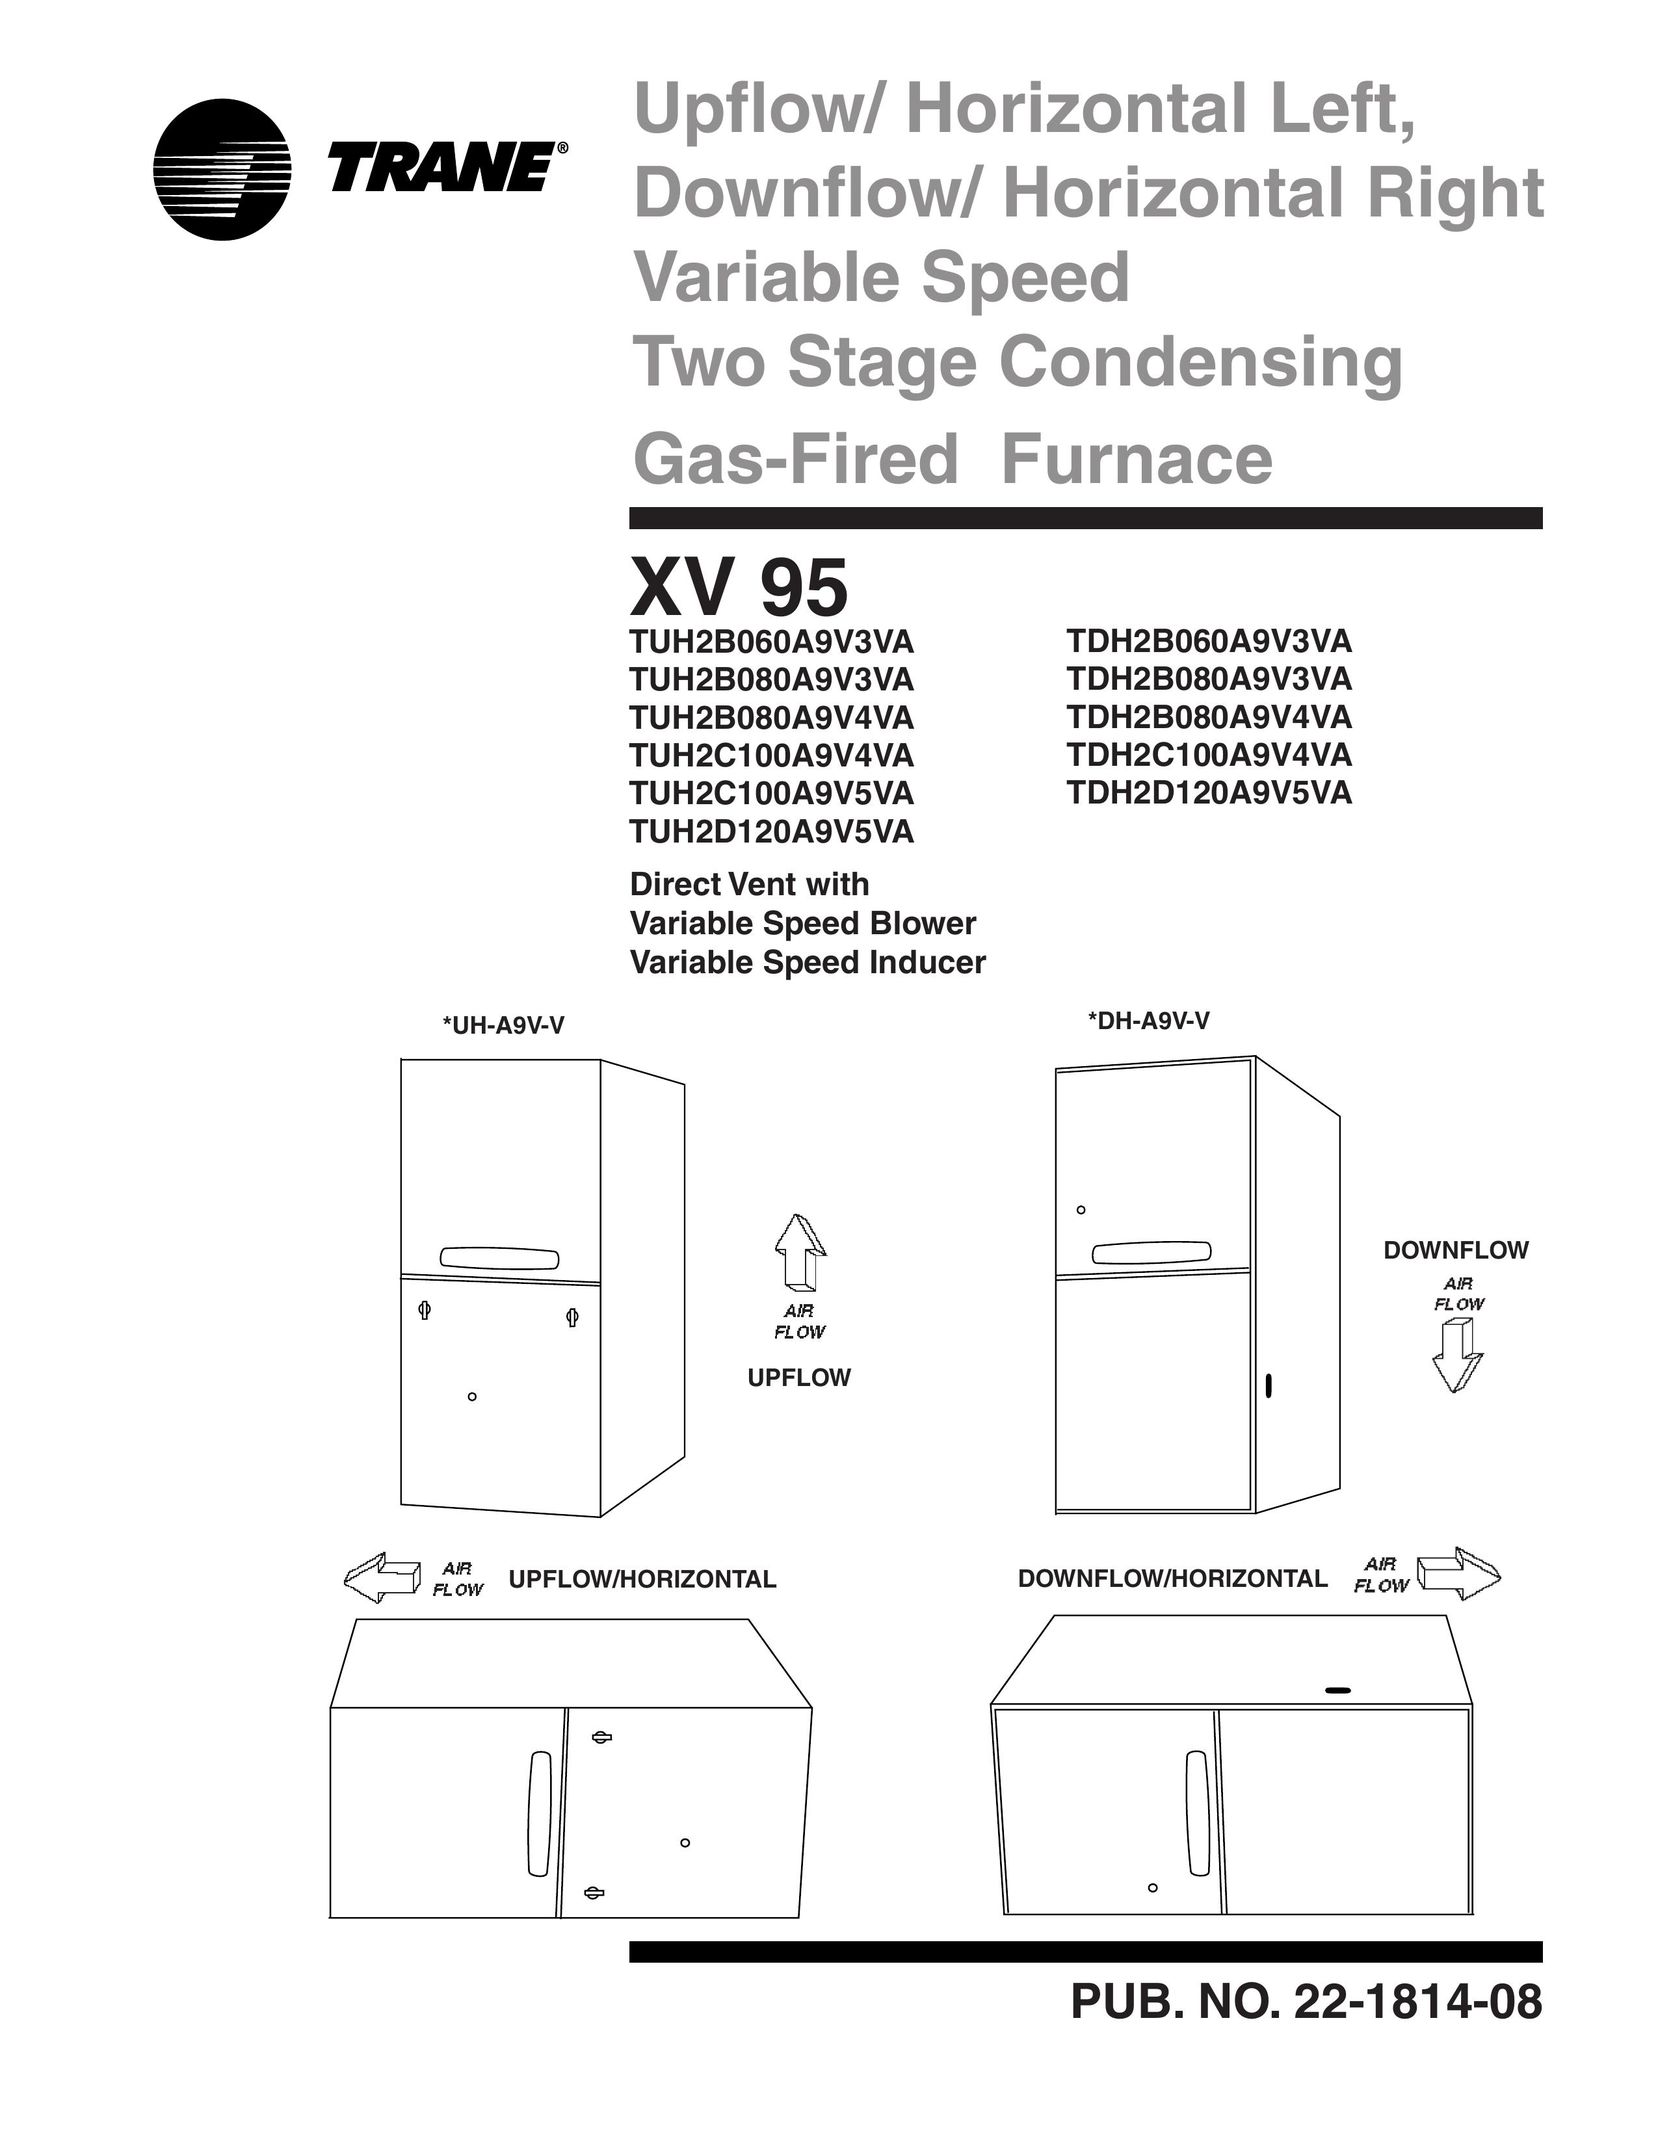 Trane TUH2C100A9V5VA Furnace User Manual